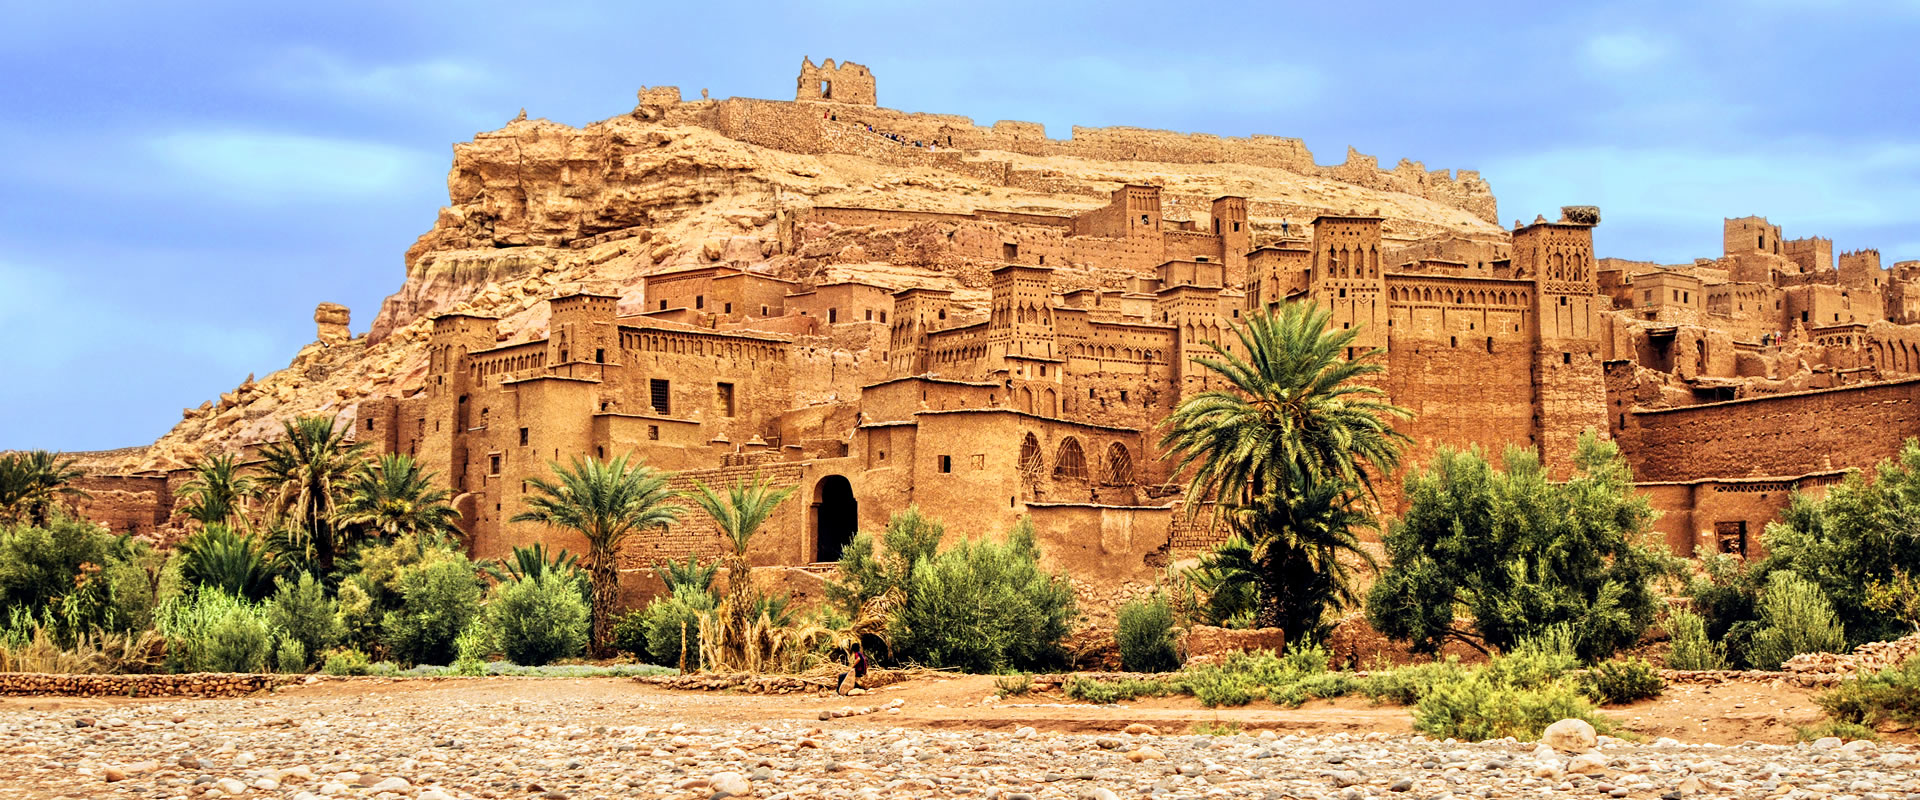 region of Ouarzazate